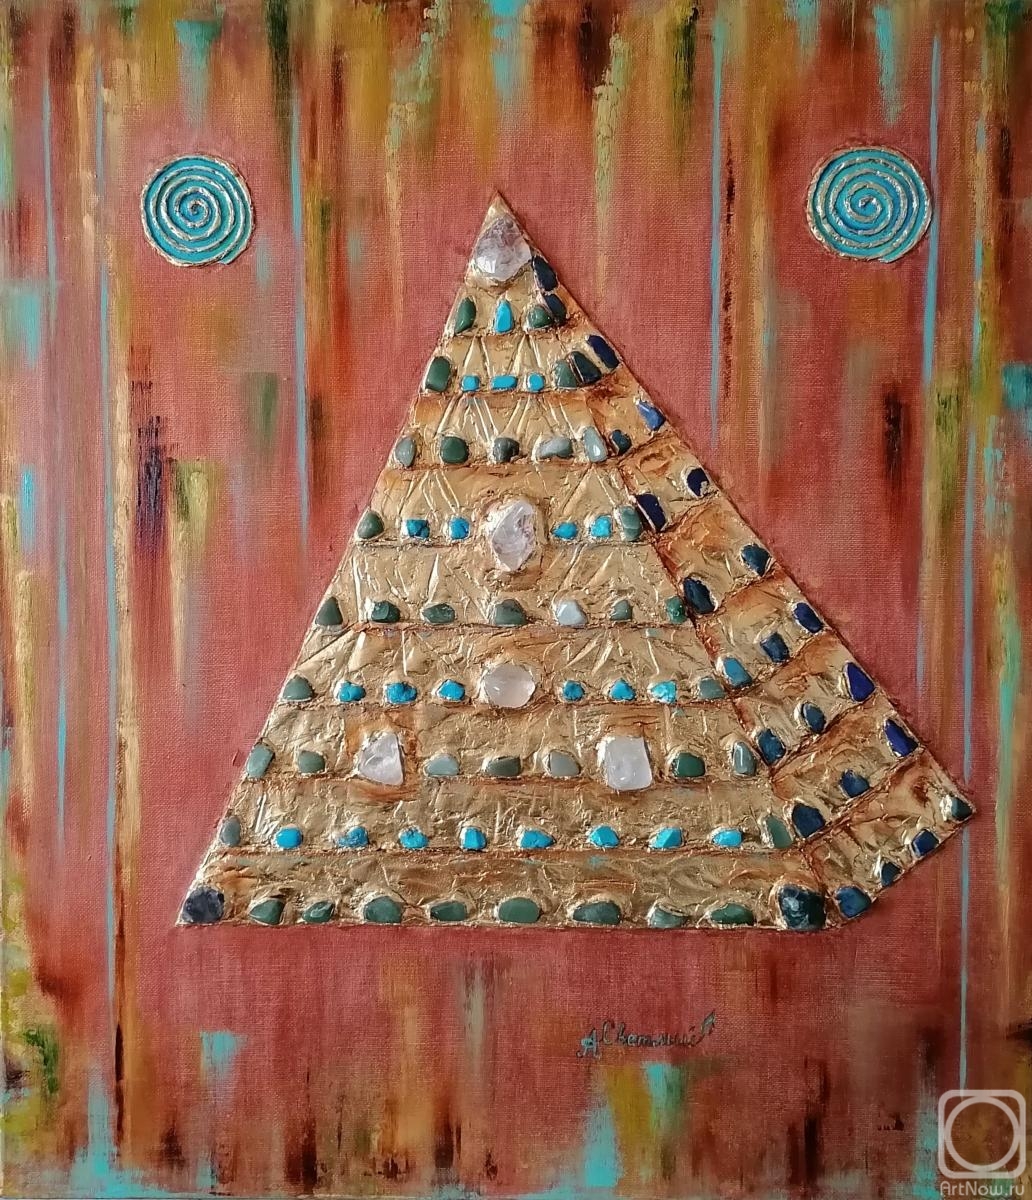 Svetlyy Aleksandr. Crystal Pyramid